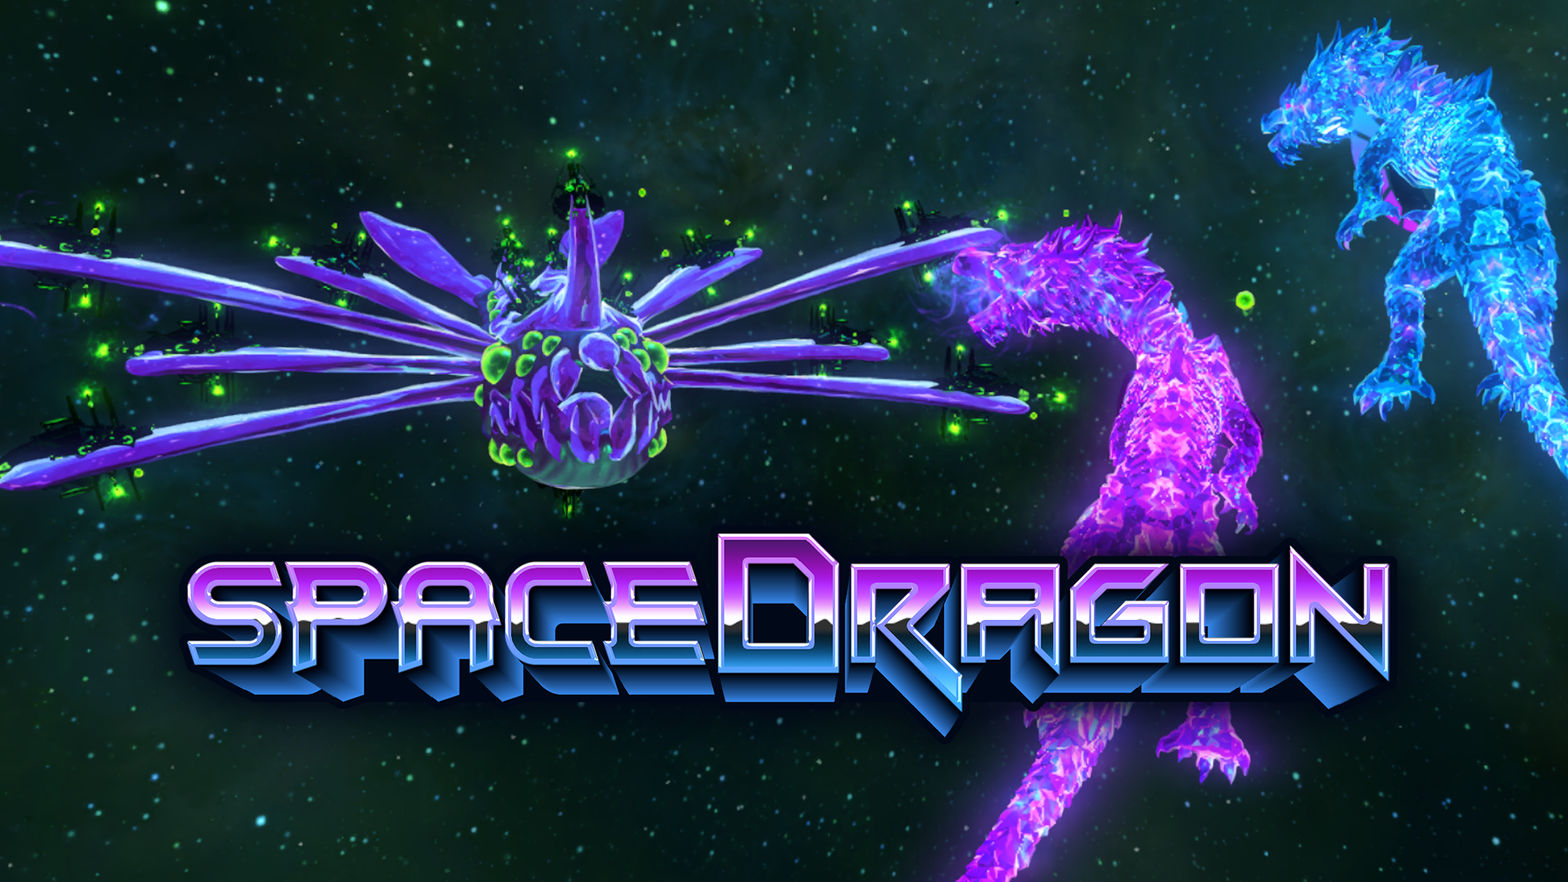 Space Dragon Demo